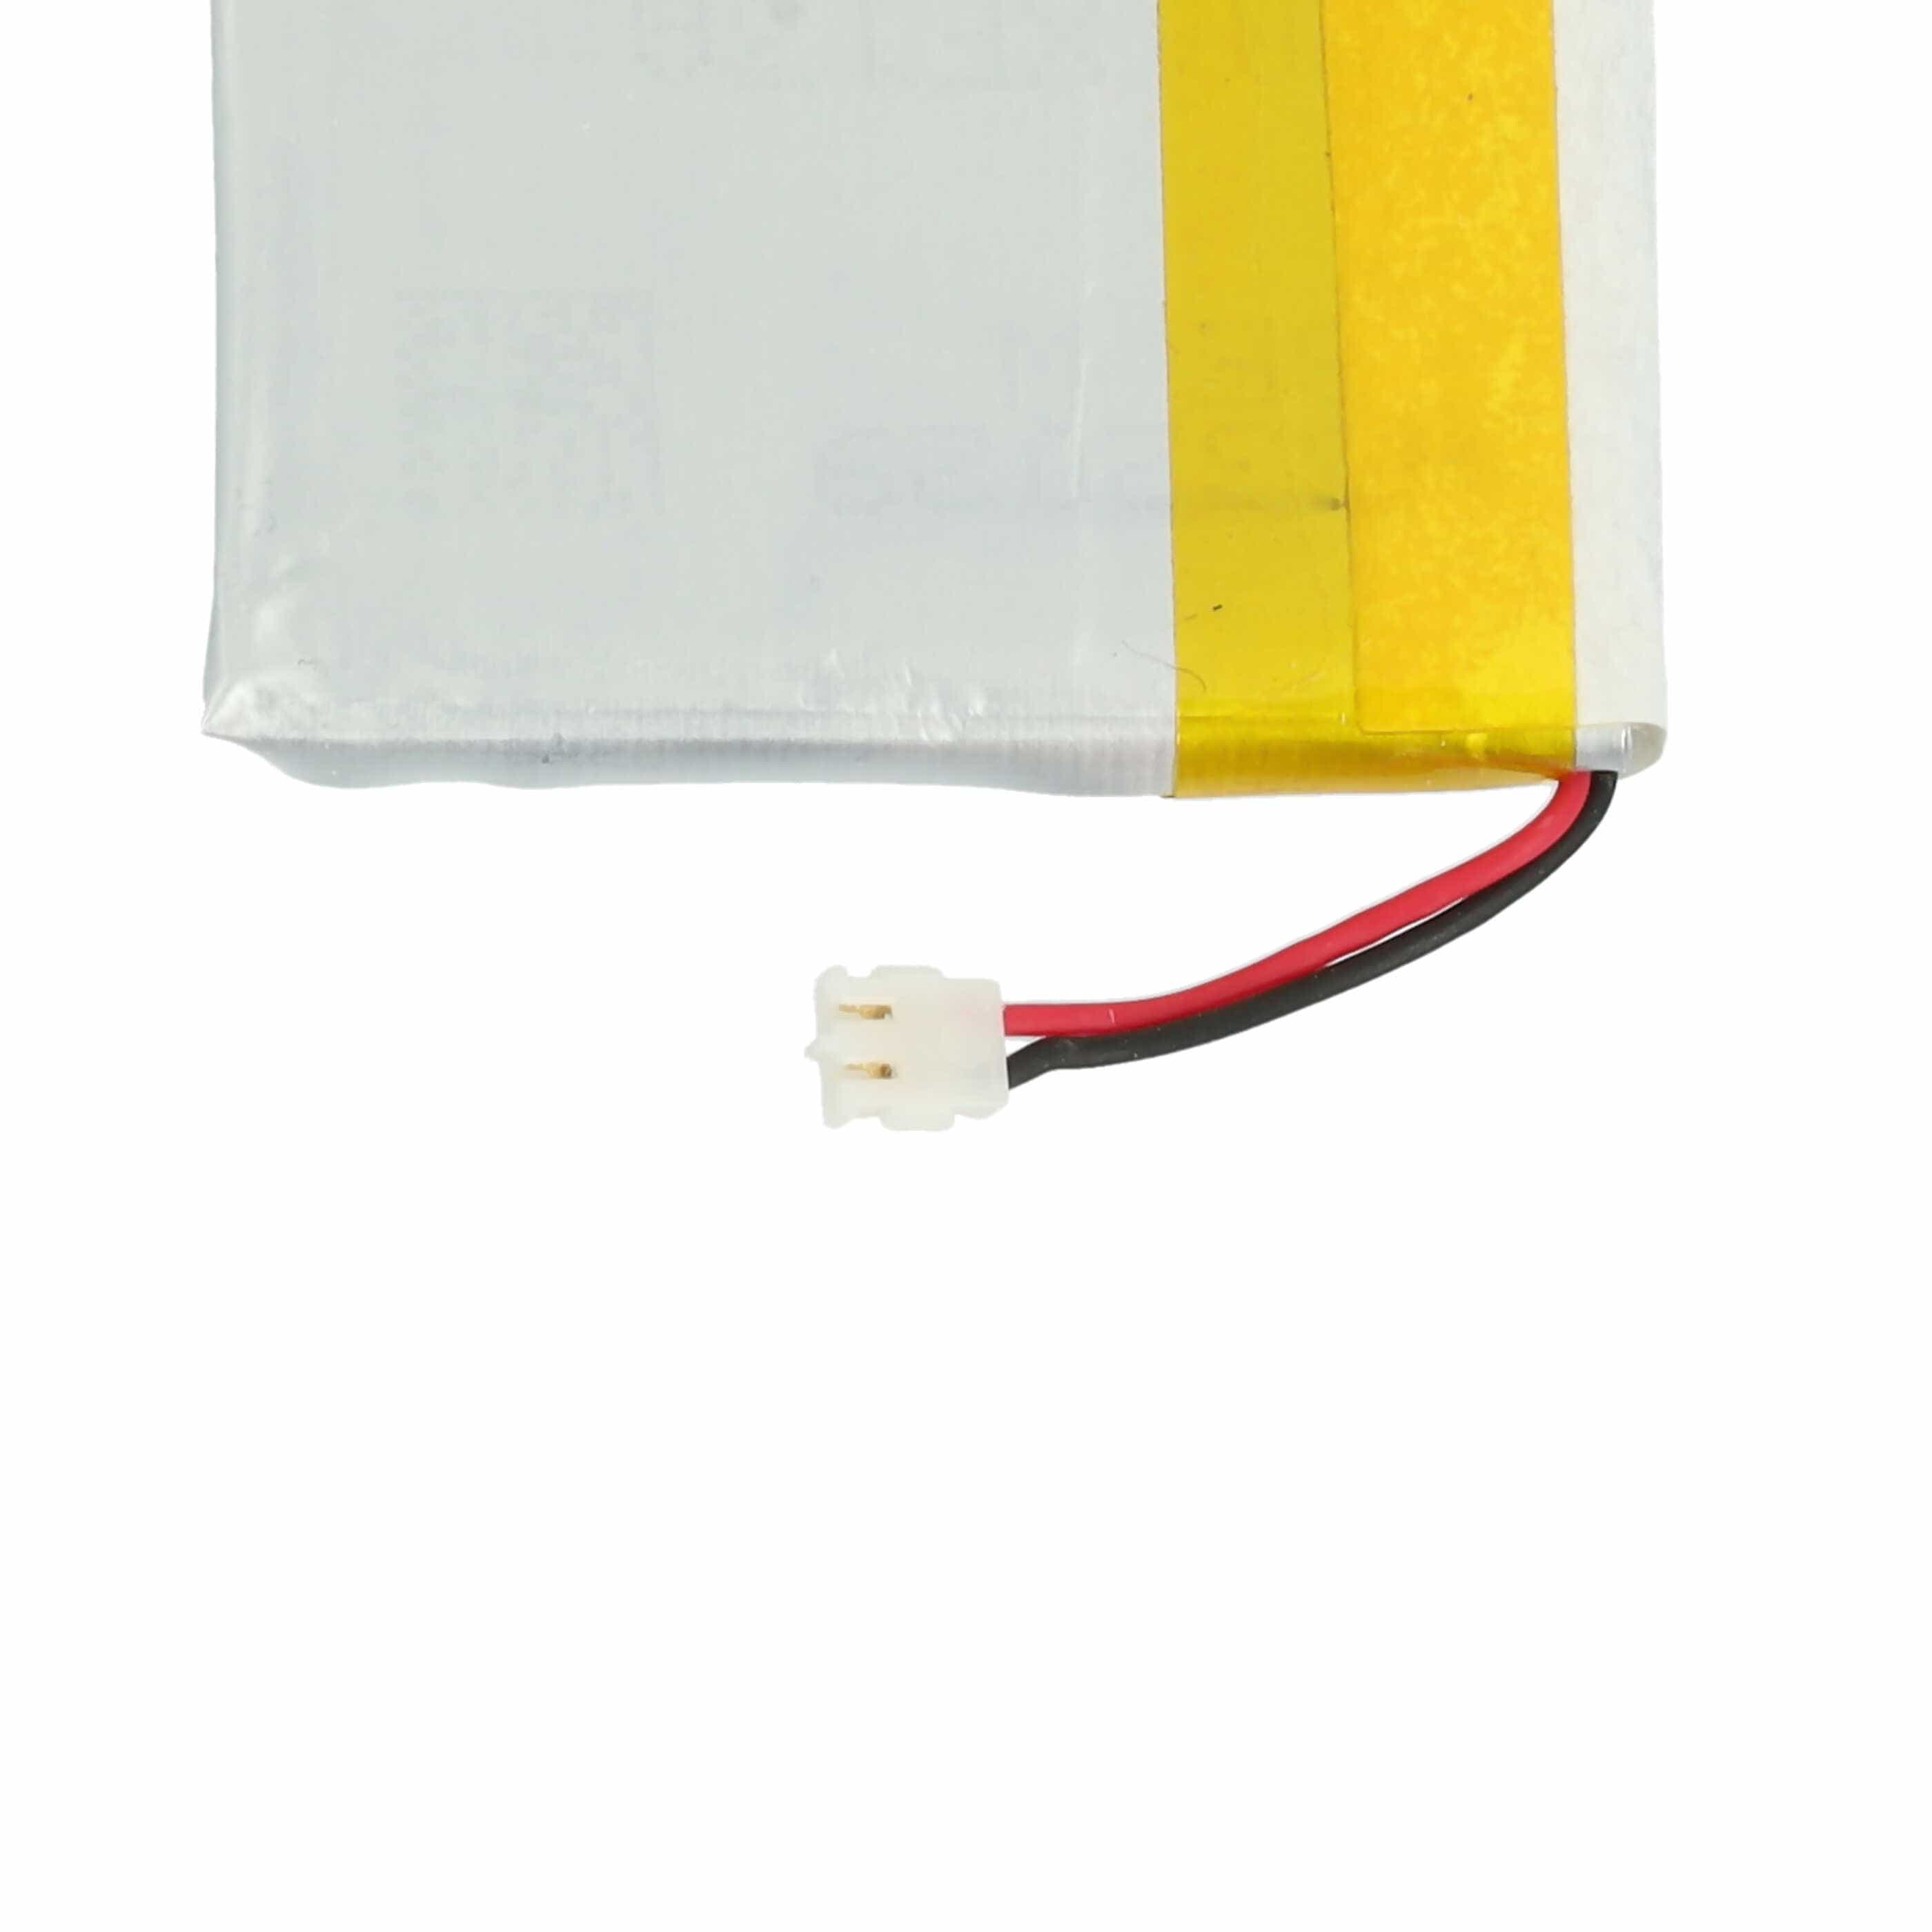 Smartwatch Battery Replacement for Garmin 361-00072-10, 361-00072-00 - 180mAh 3.7V Li-polymer + Tools